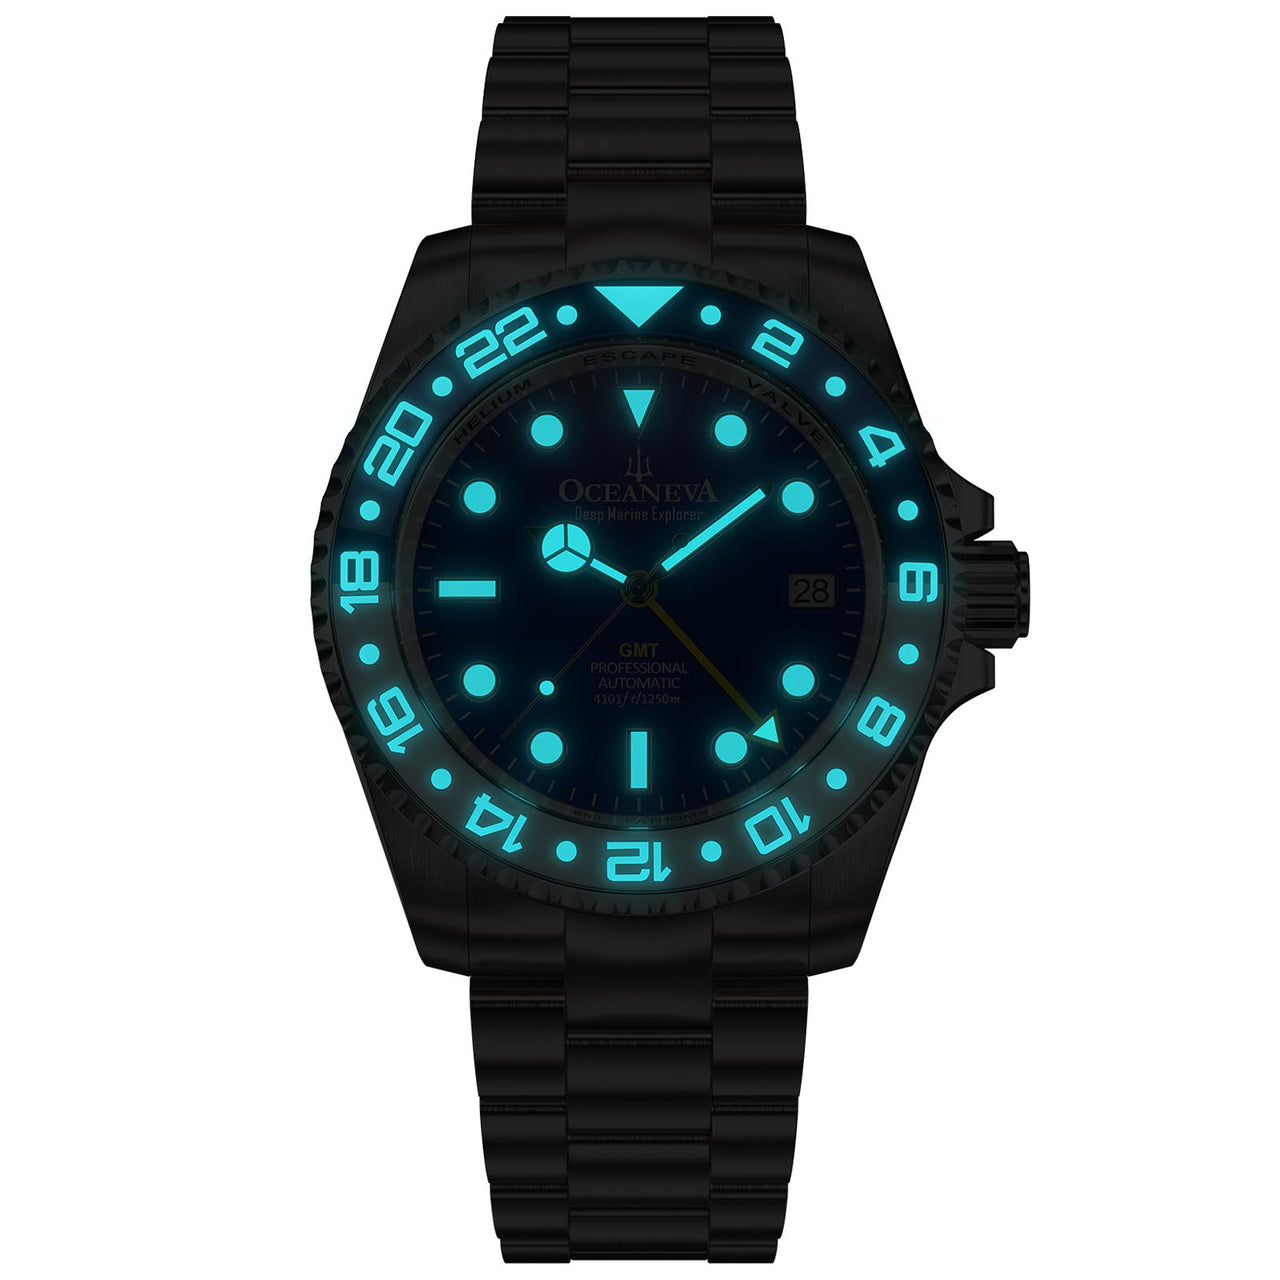 Oceaneva Titanium Watch with enhanced BGW9 Grade A luminous upgrade